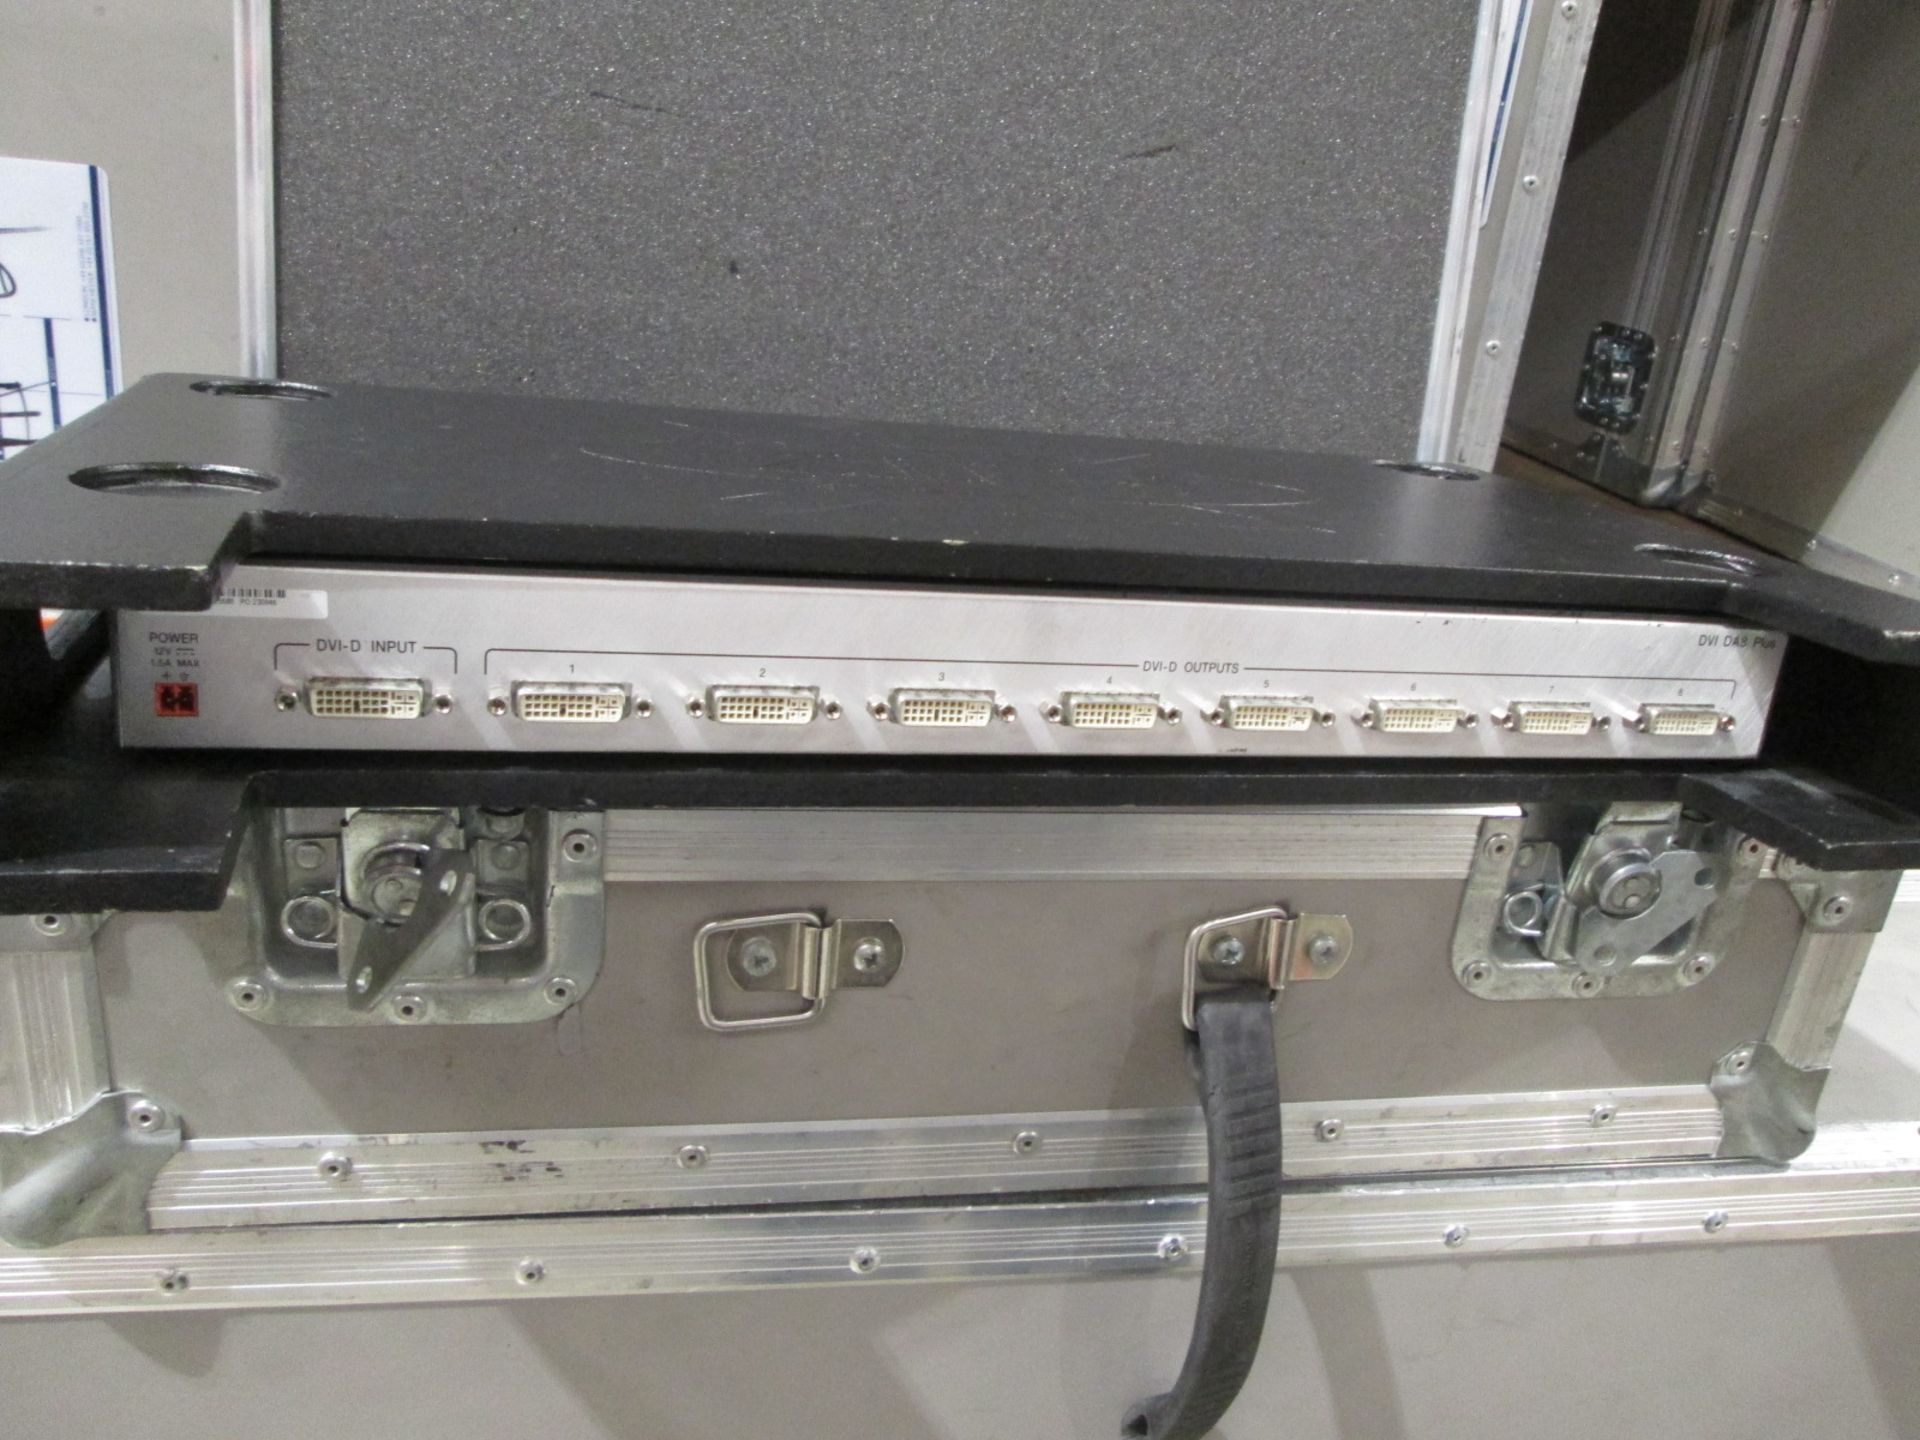 Extron DVI DA8 Plus 1:8 distribution Amplifers, In flight cases (Qty 4) - Image 4 of 5